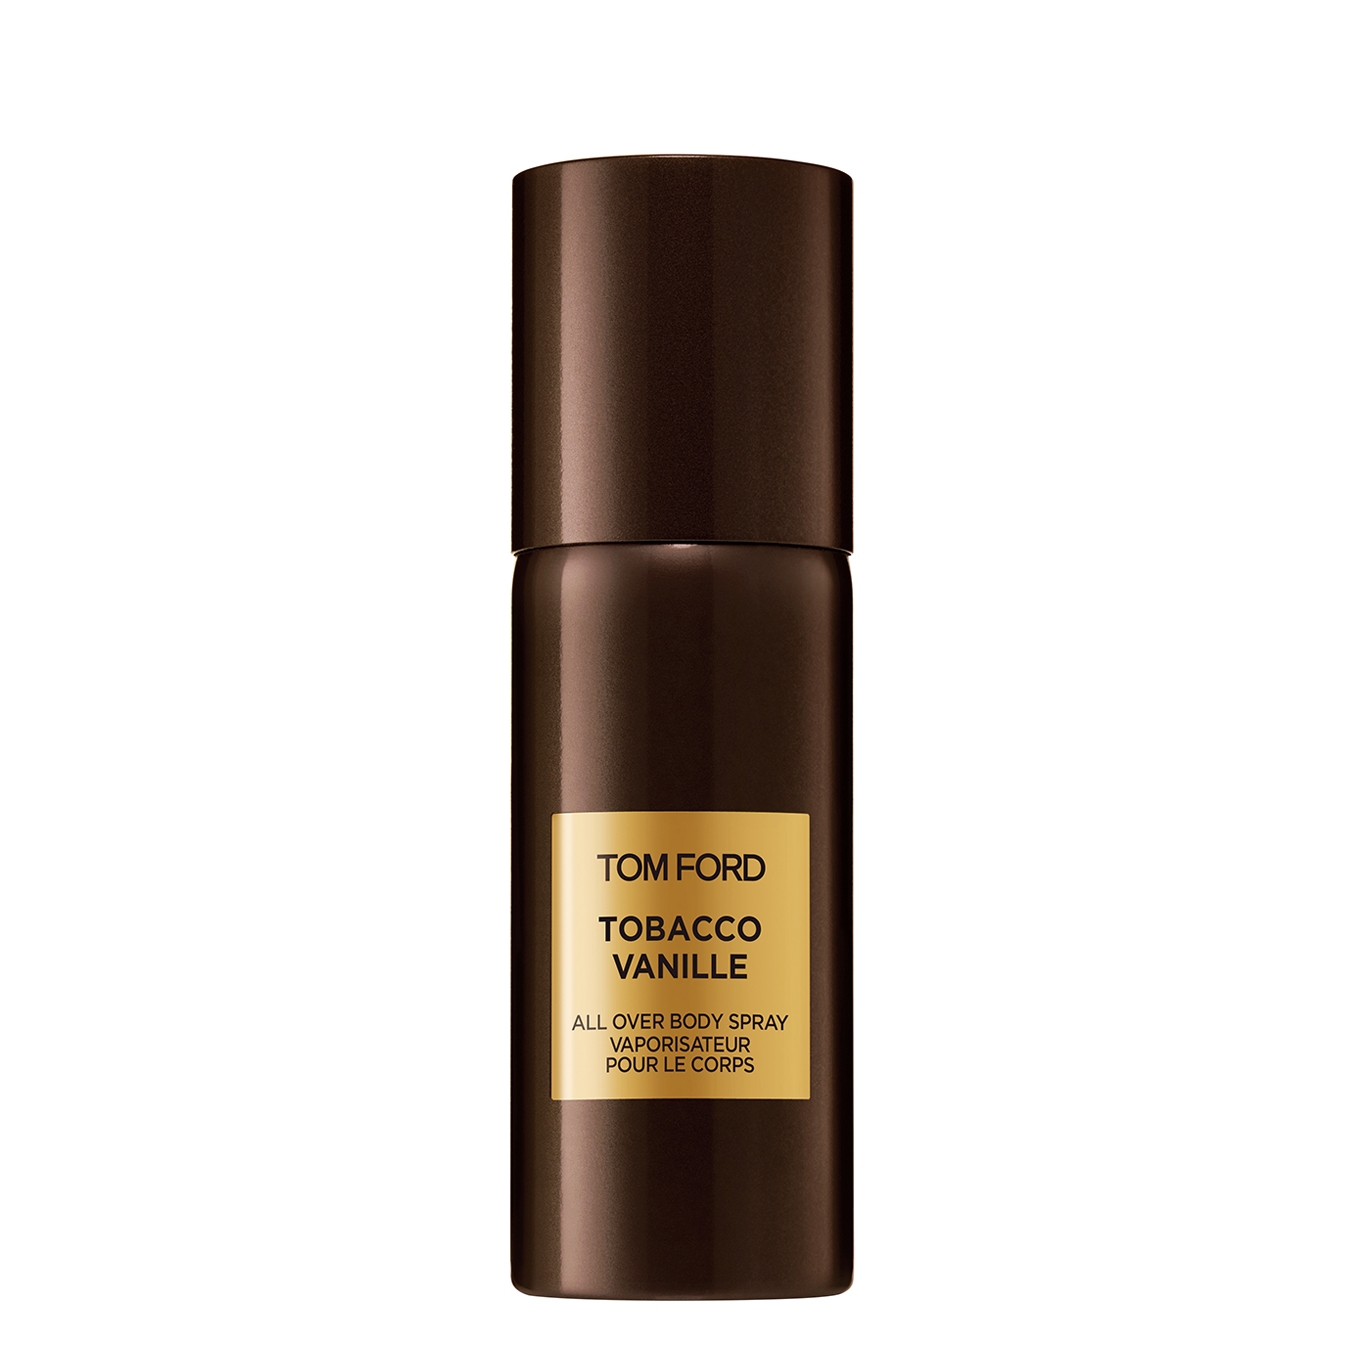 Tom Ford Tobacco Vanille Body Spray 150ml, Fragrance, Floral